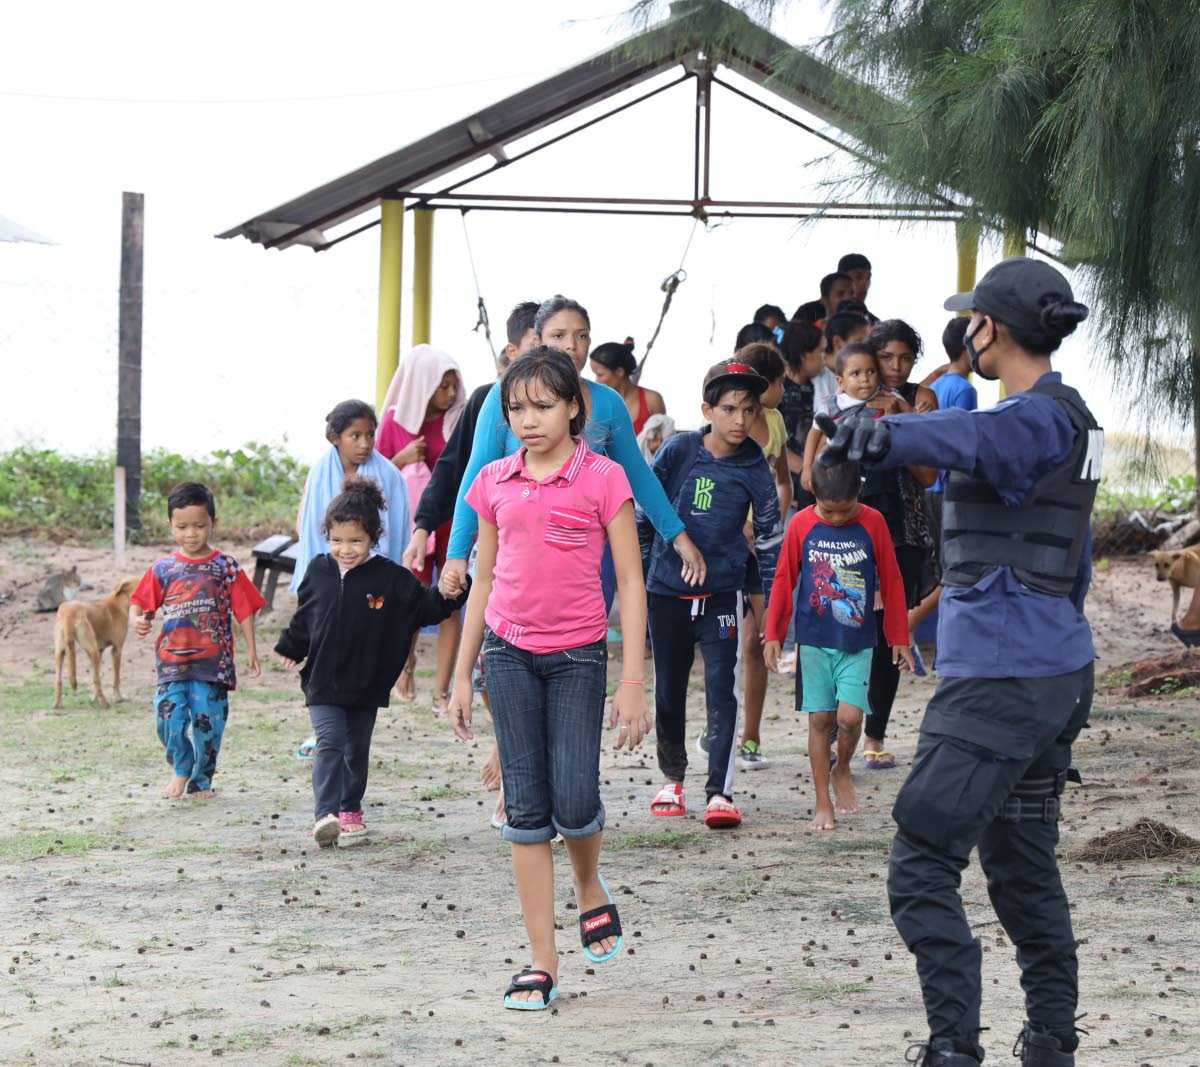 TT to receive EU funding to assist Venezuelan migrants and their children